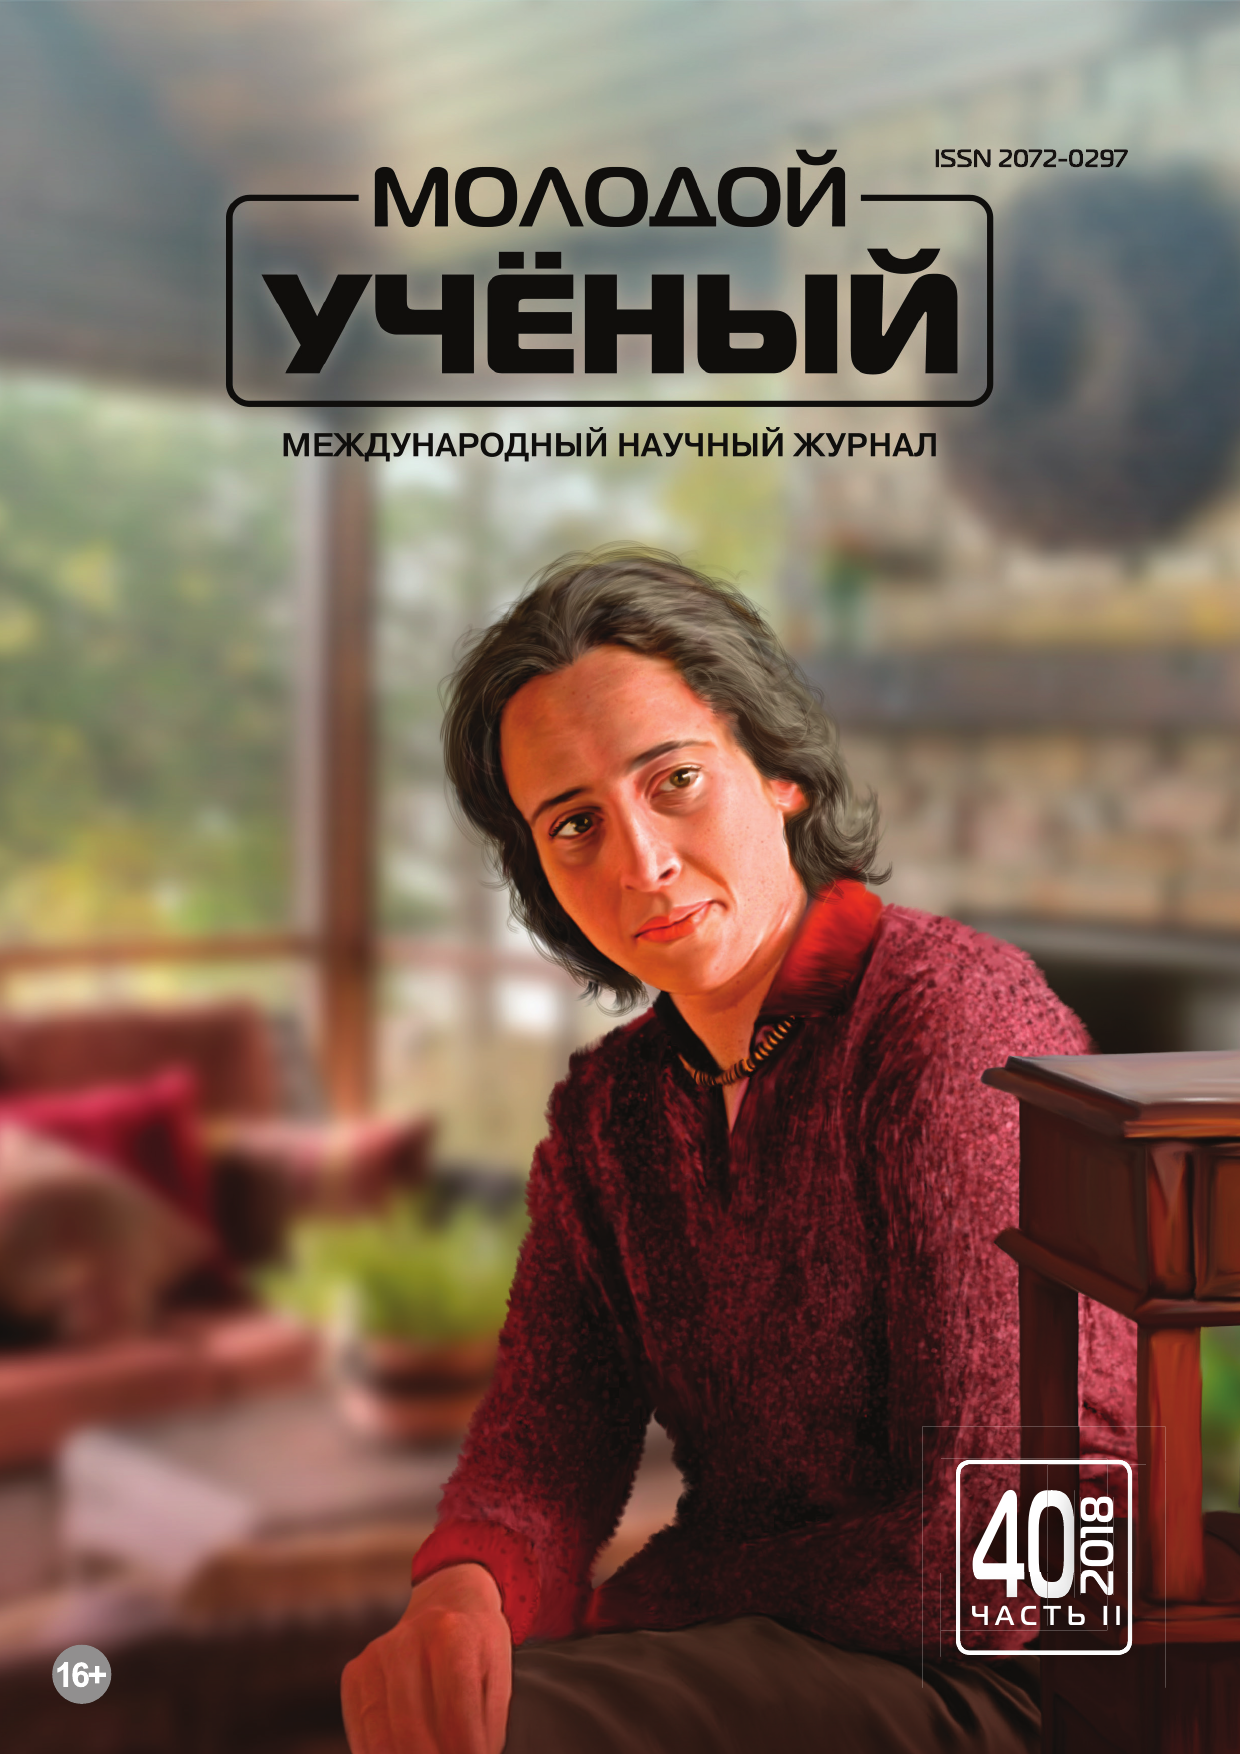 Https moluch ru young archive. Издательство молодой ученый. Журнал молодой ученый 2018. Moluch.